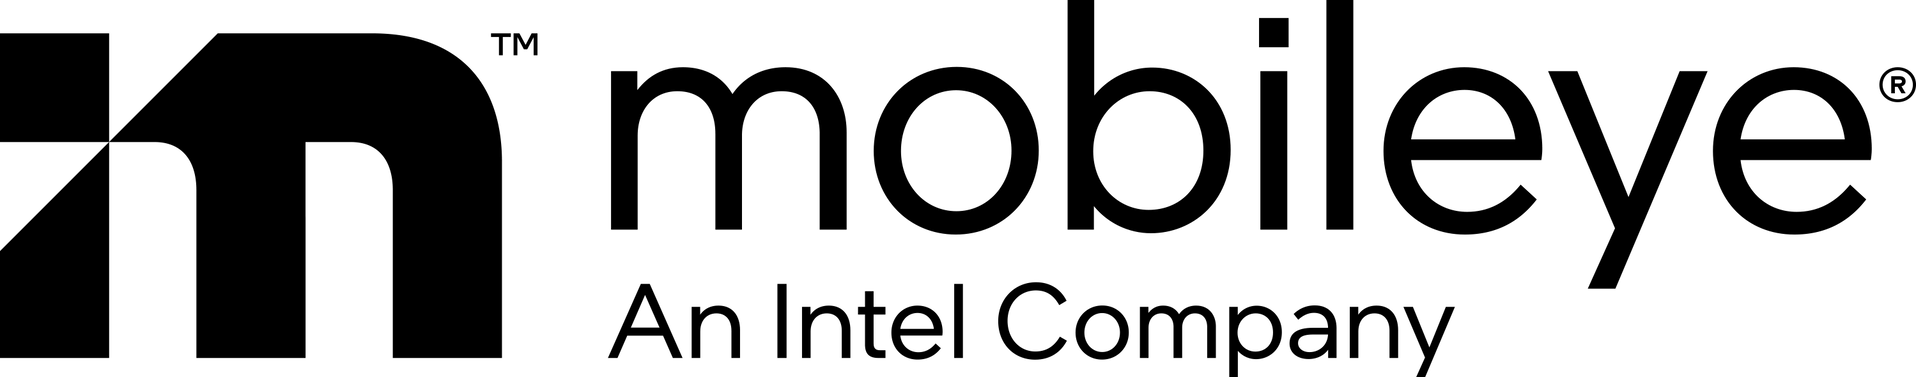 mobileye-logo-black.png